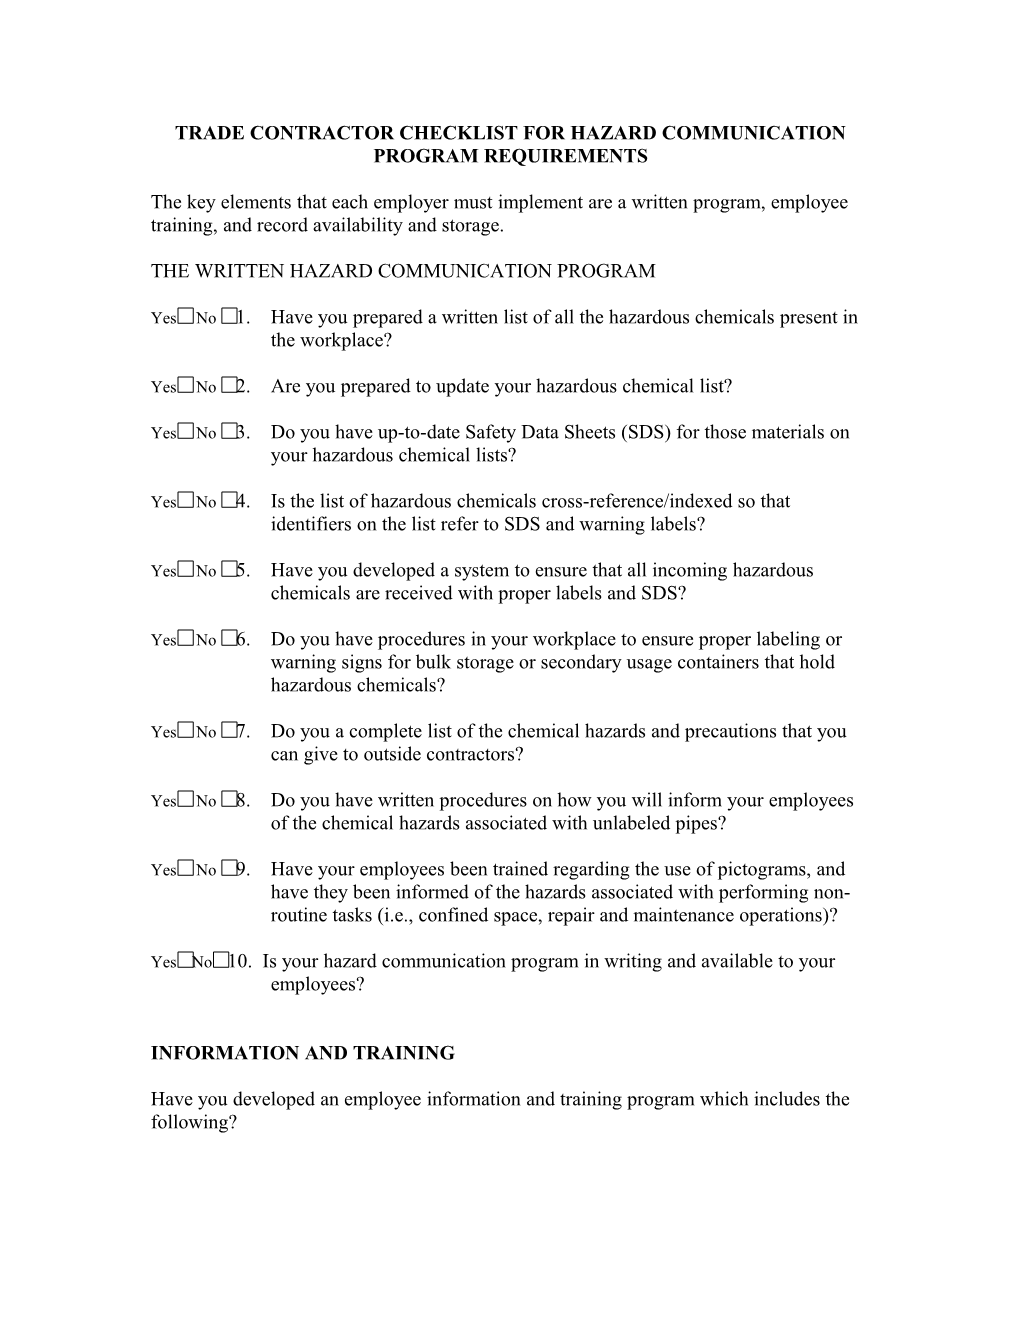 Trade Contractor Checklist for Hazard Communication Program Requirements